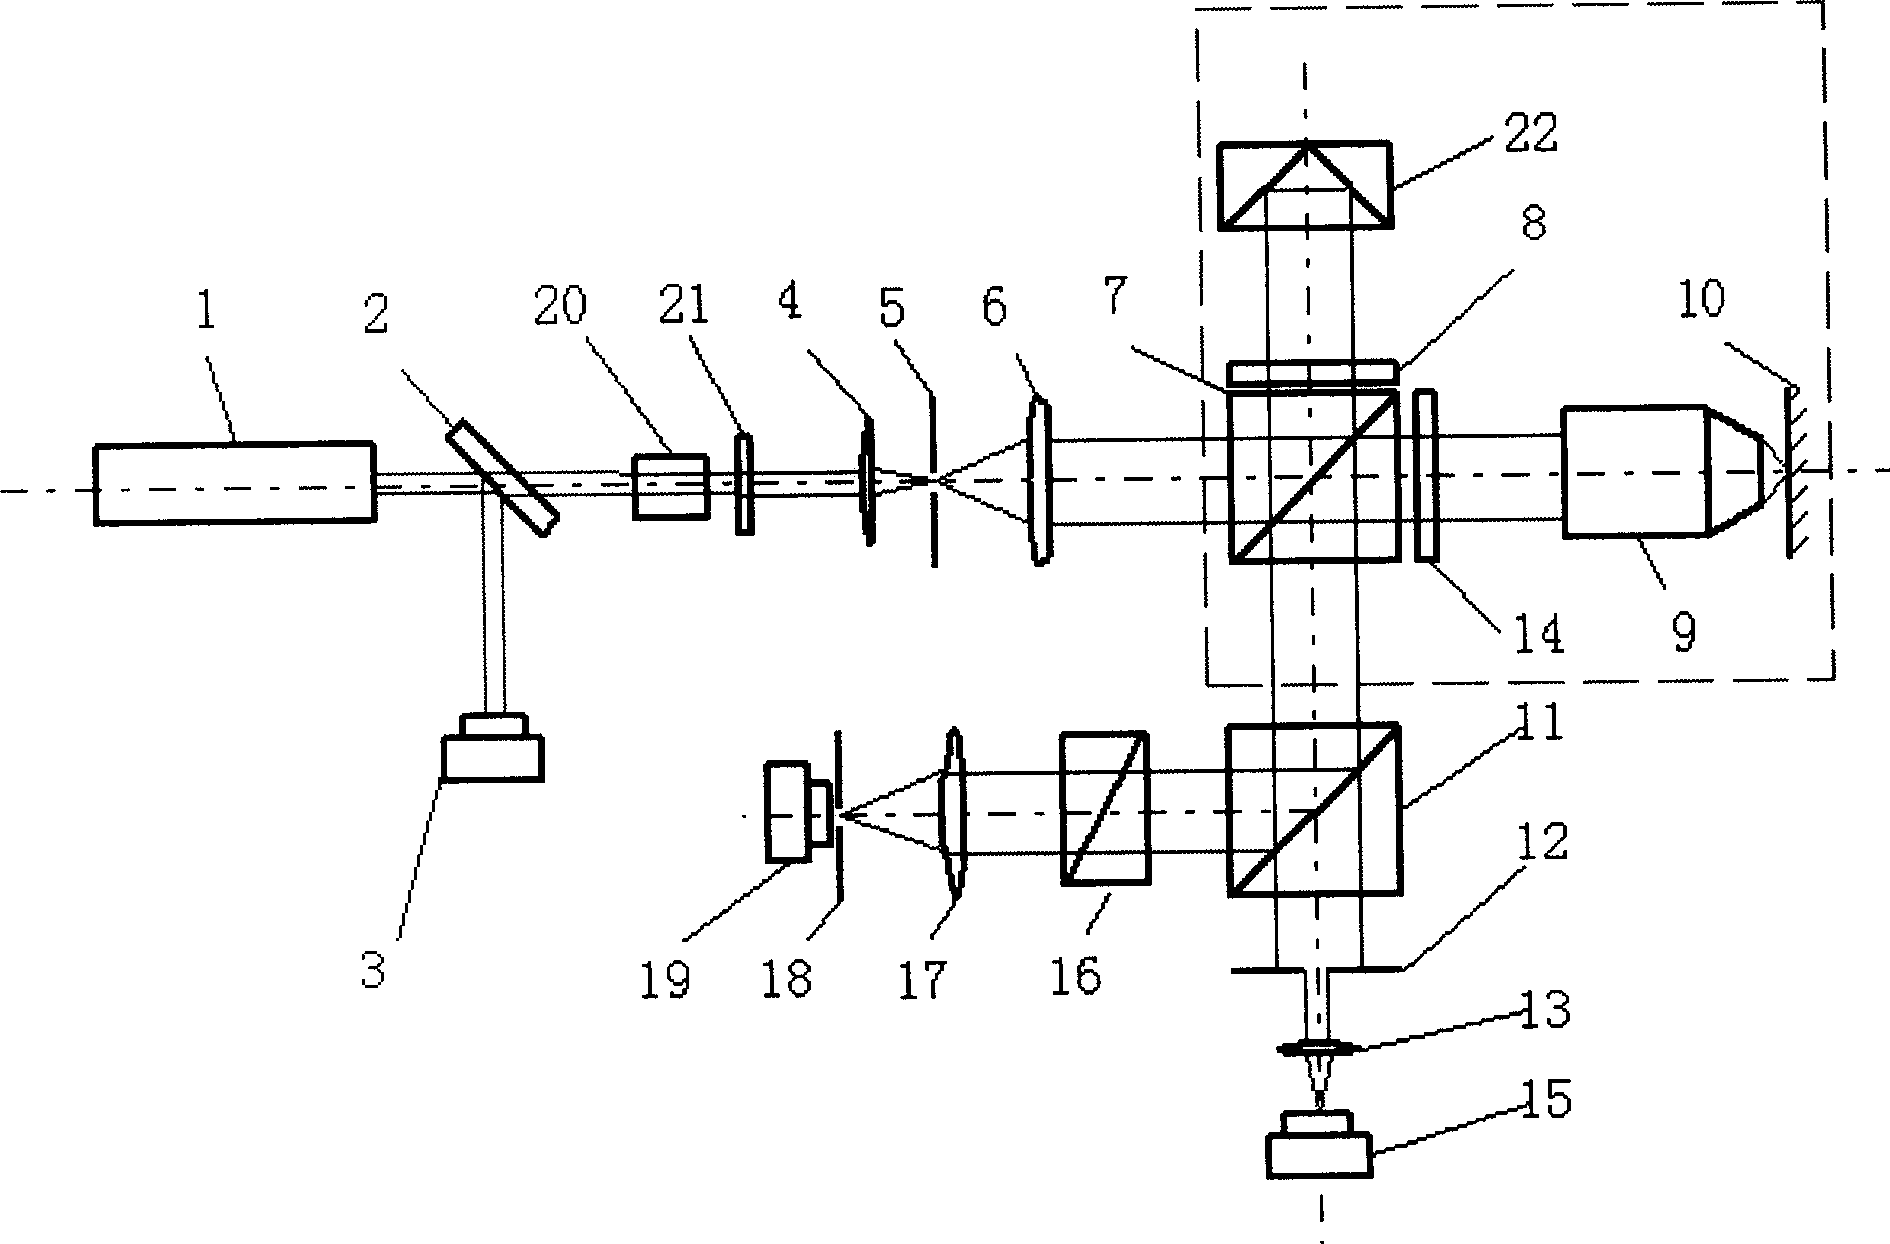 Co-optical circuit double-frequency heterodyne confocal micromeasurer